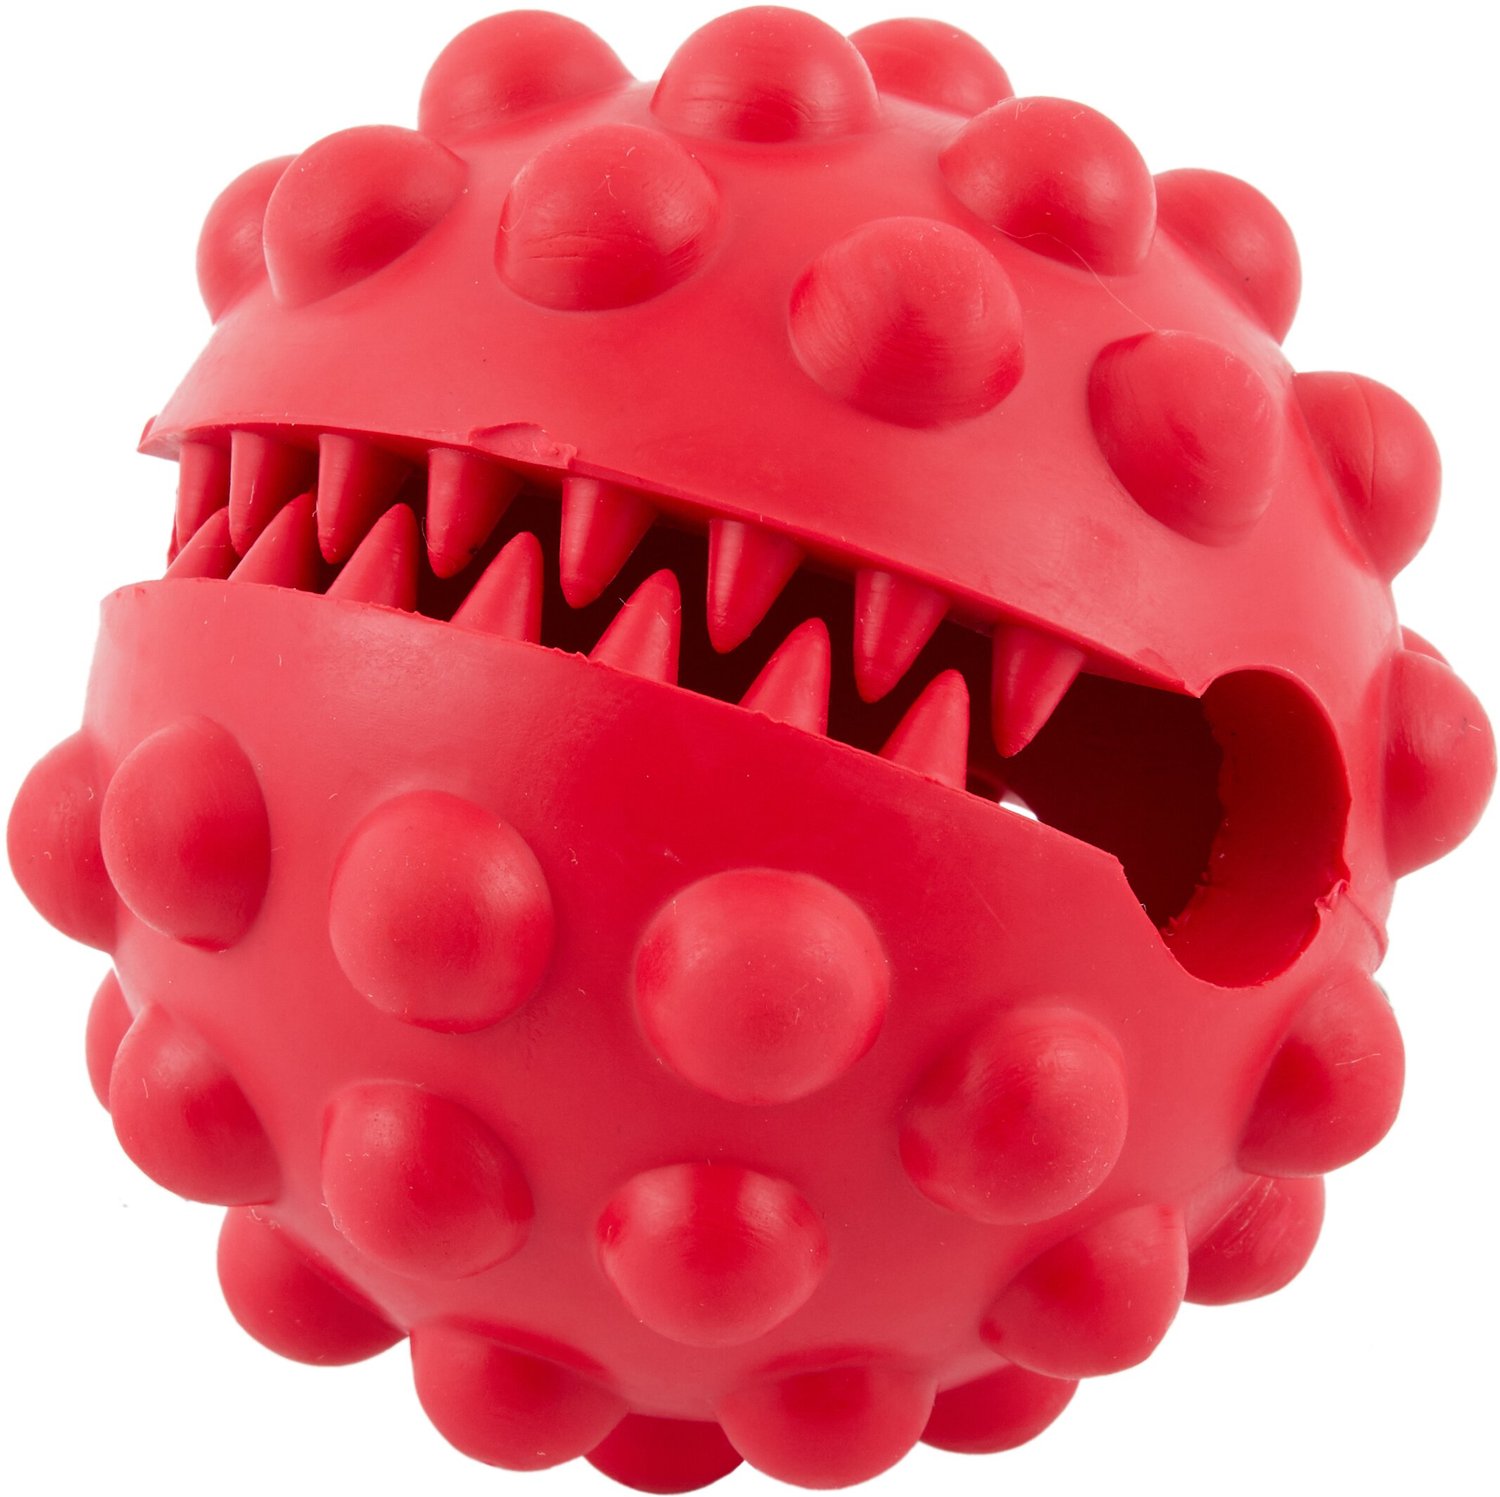 knobby ball dog toy